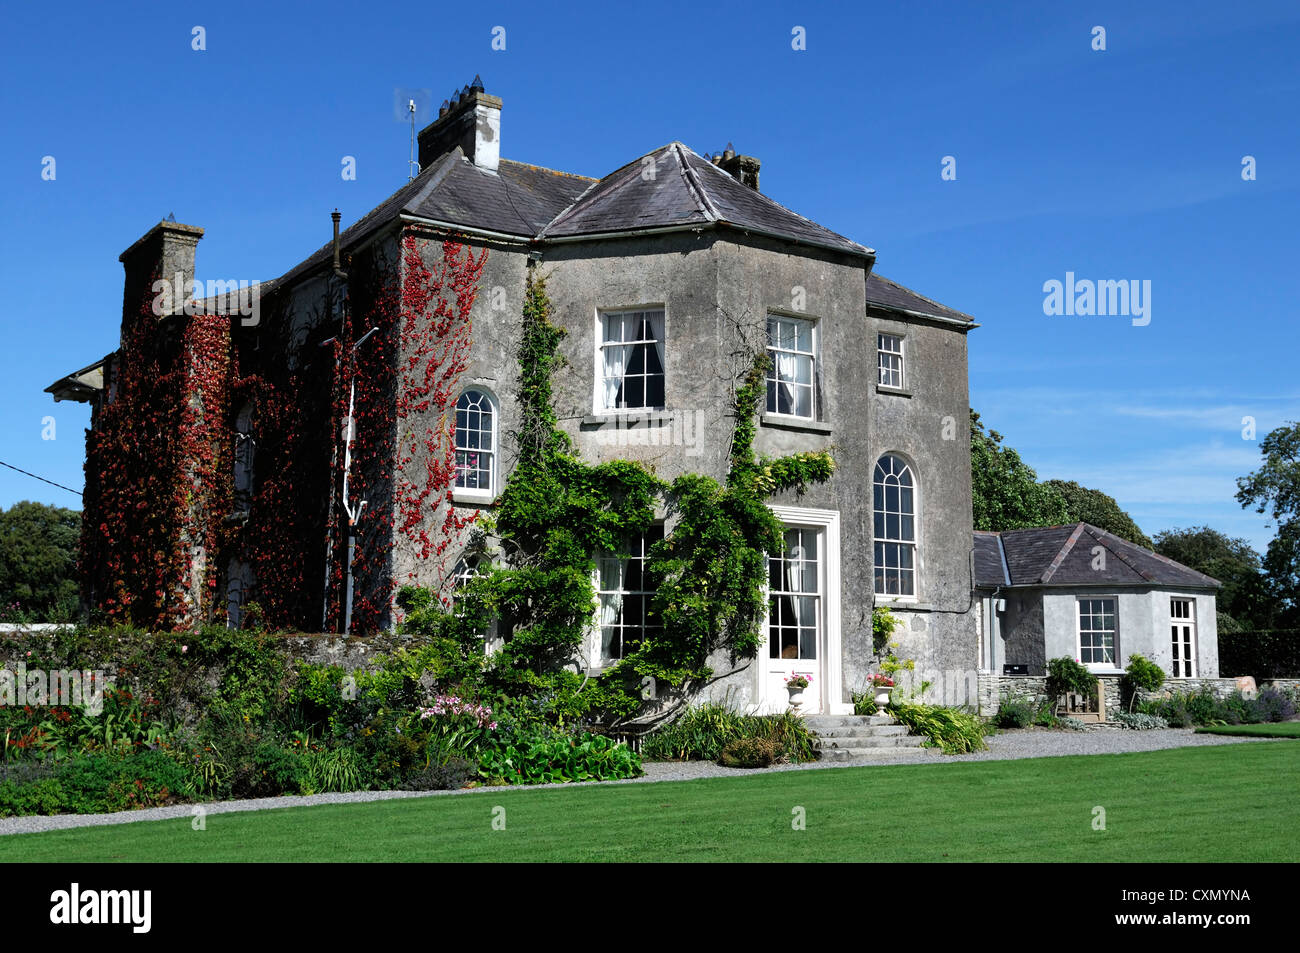 Burton casa hogar familiar Fennell kildare Irlanda jardines villa georgiana  quaker robert power Fotografía de stock - Alamy